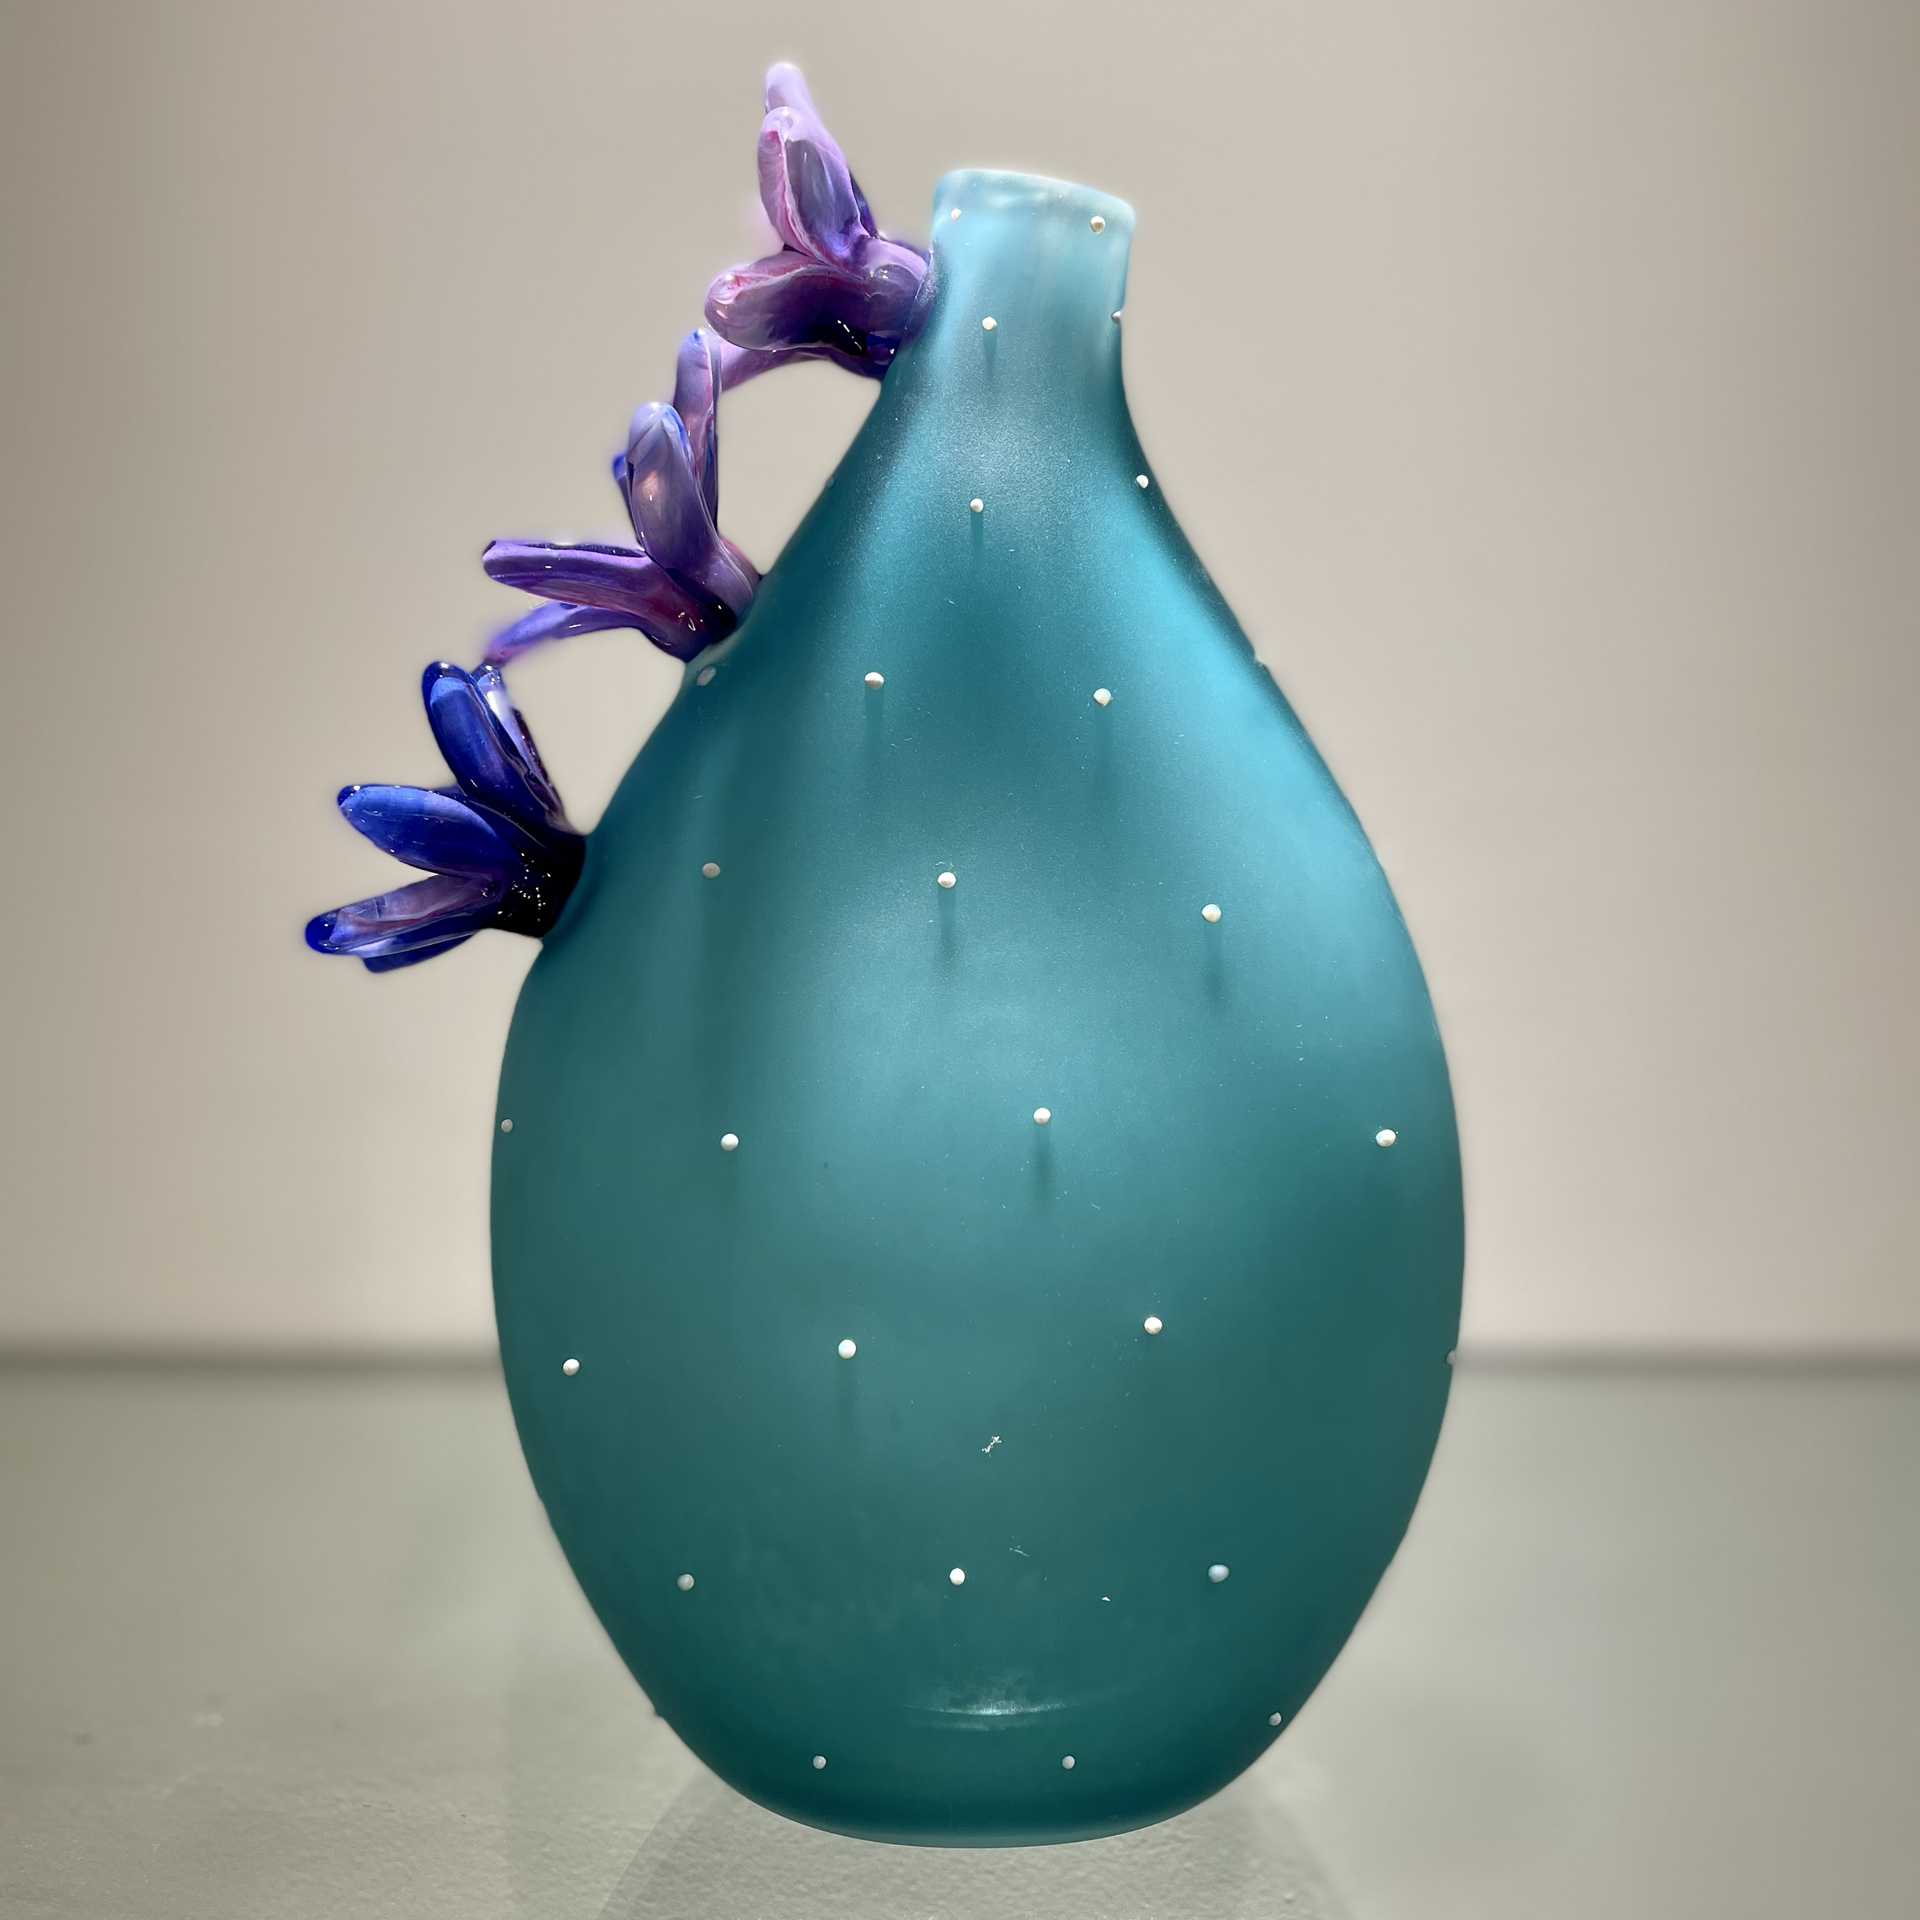 AEGEAN MIST 10" CLASSIC with 3 flowers by Nicholson van Altena Glass